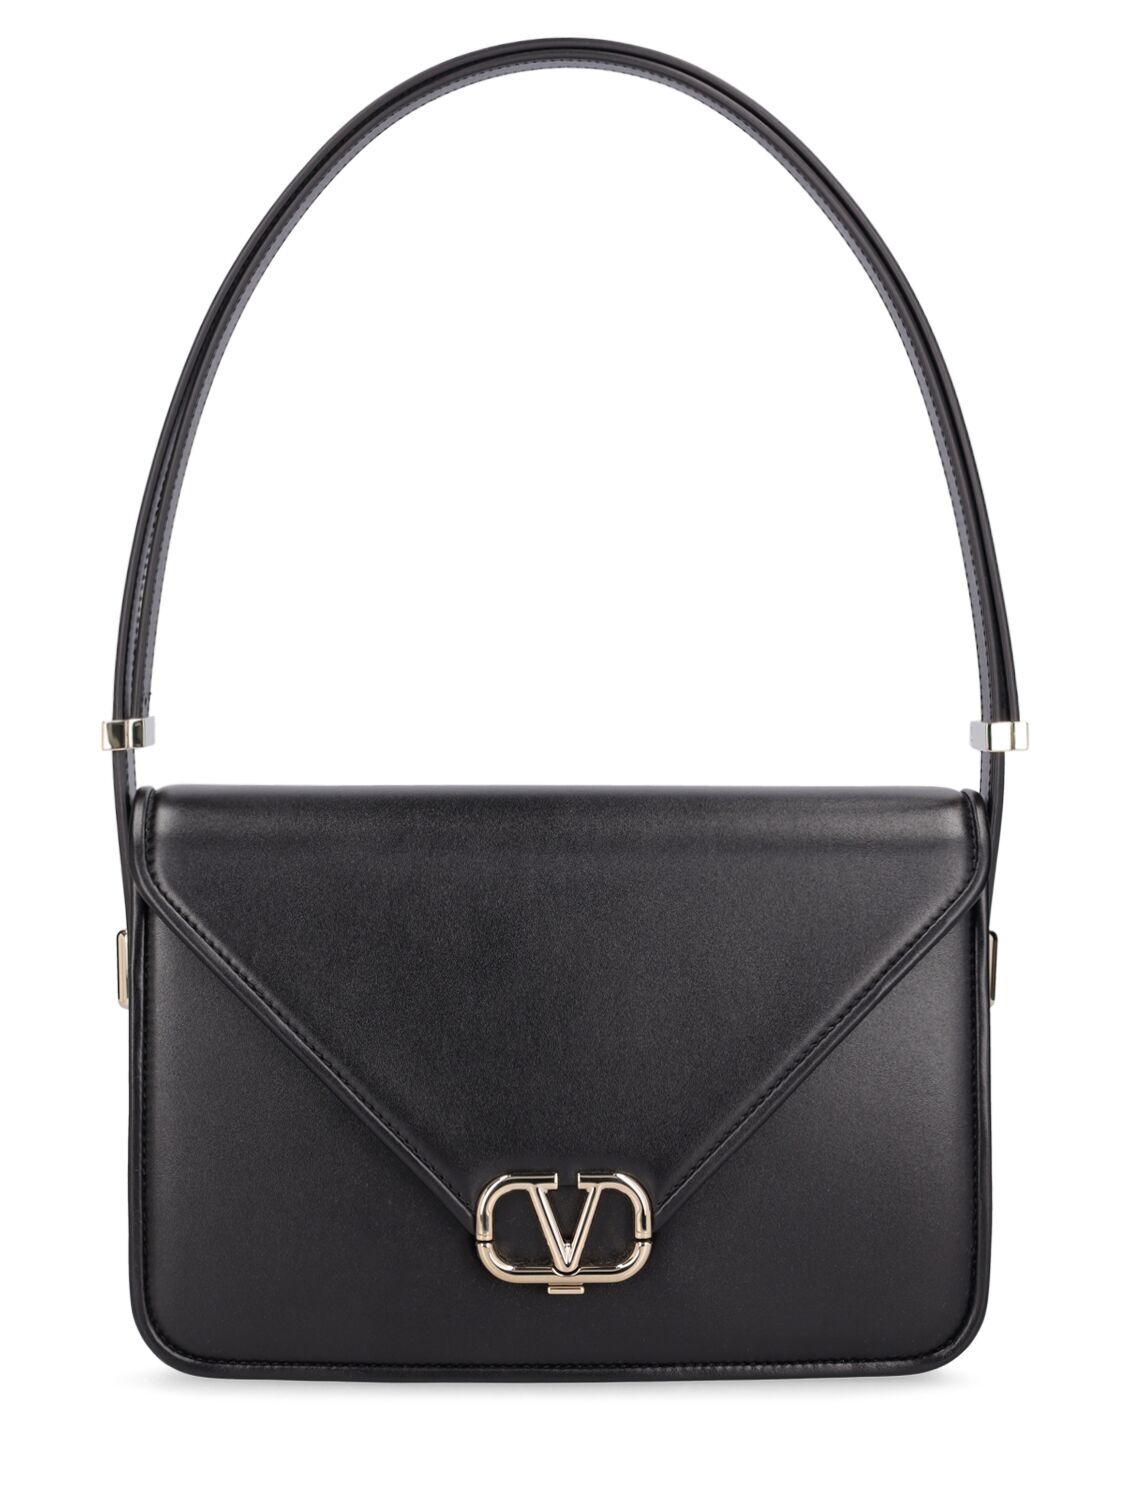 VALENTINO GARAVANI V Logo Leather Shoulder Bag in black